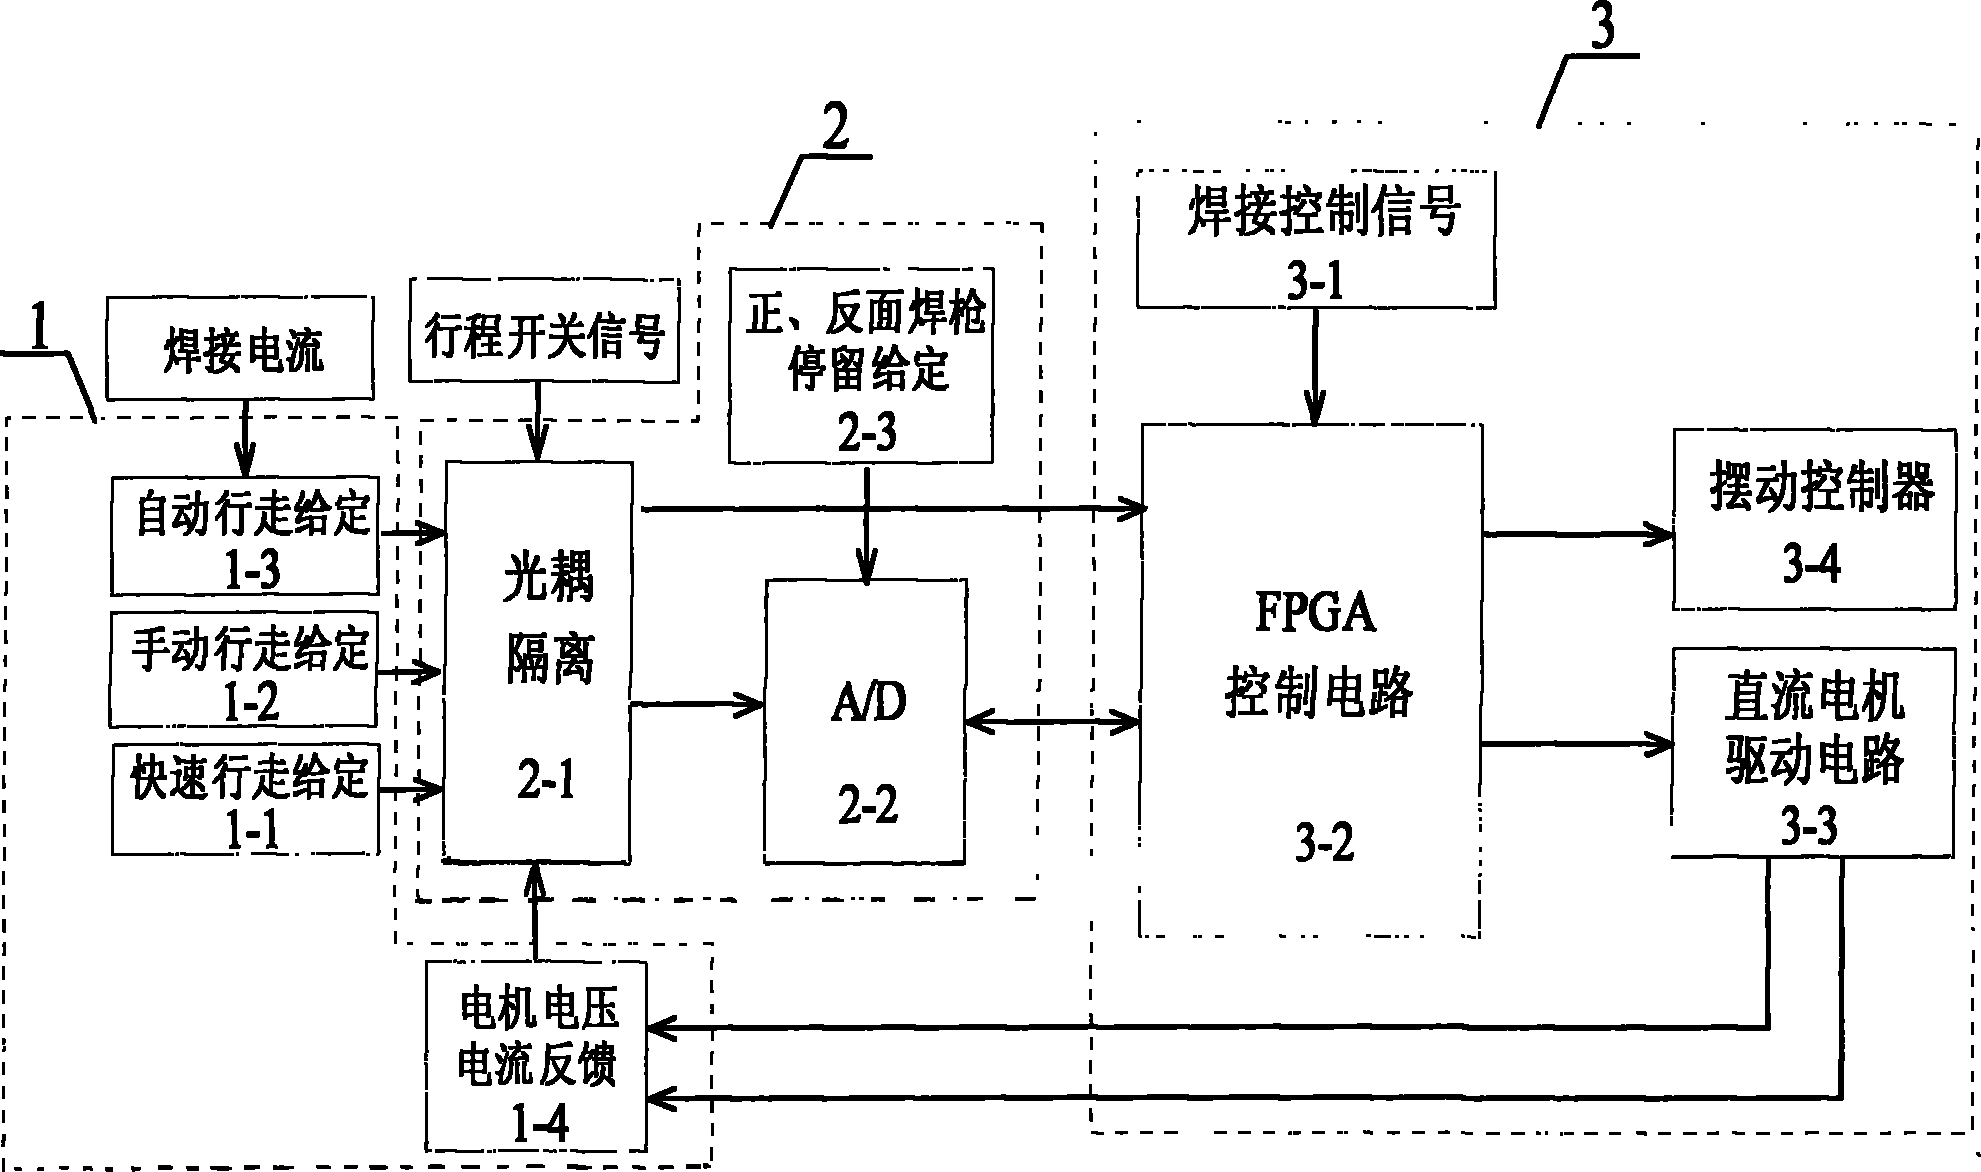 Electrogas welding arc length controller based on FPGA (Field Programmable Gate Array)